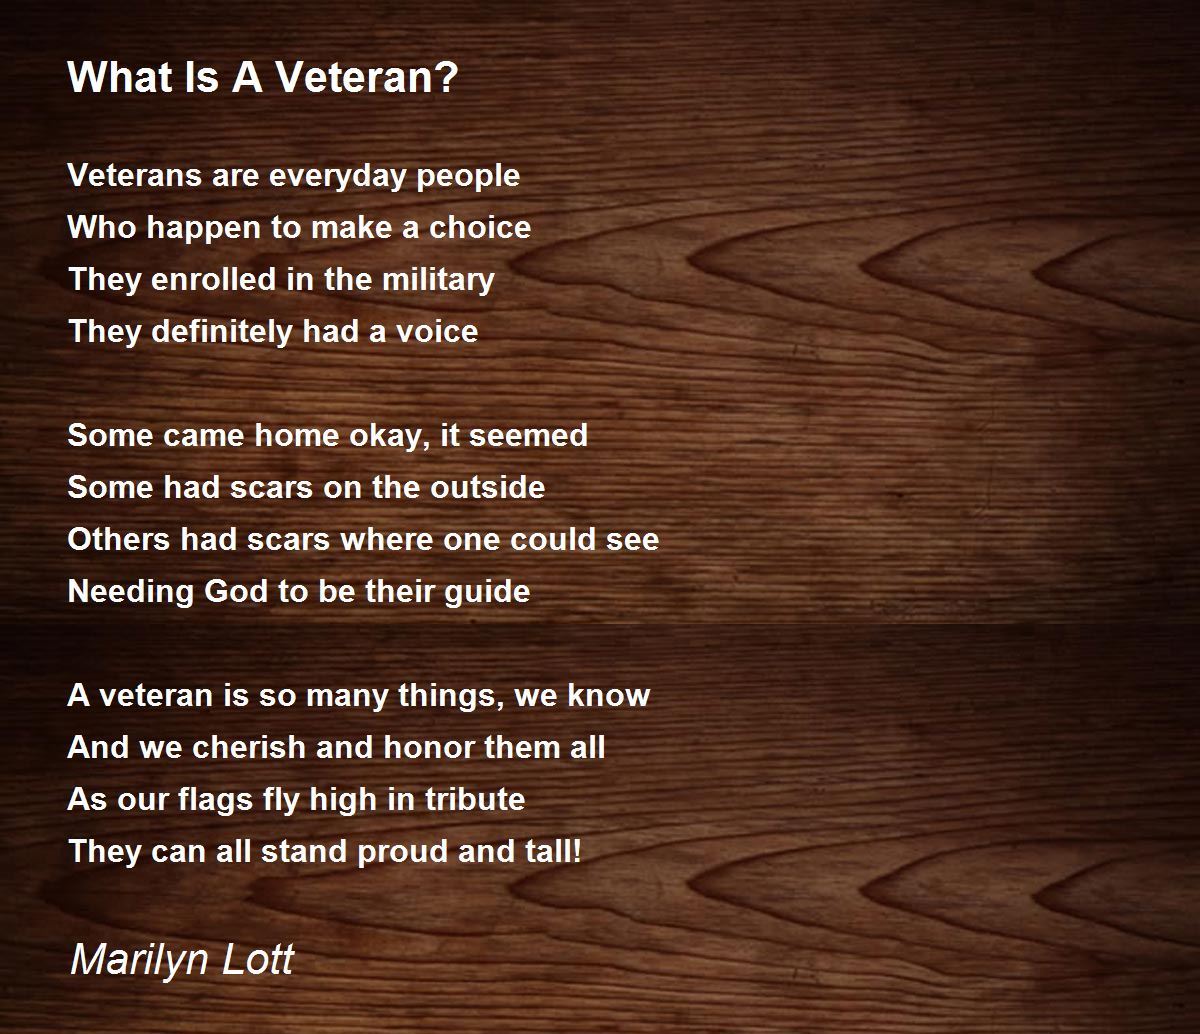 essay about a veteran